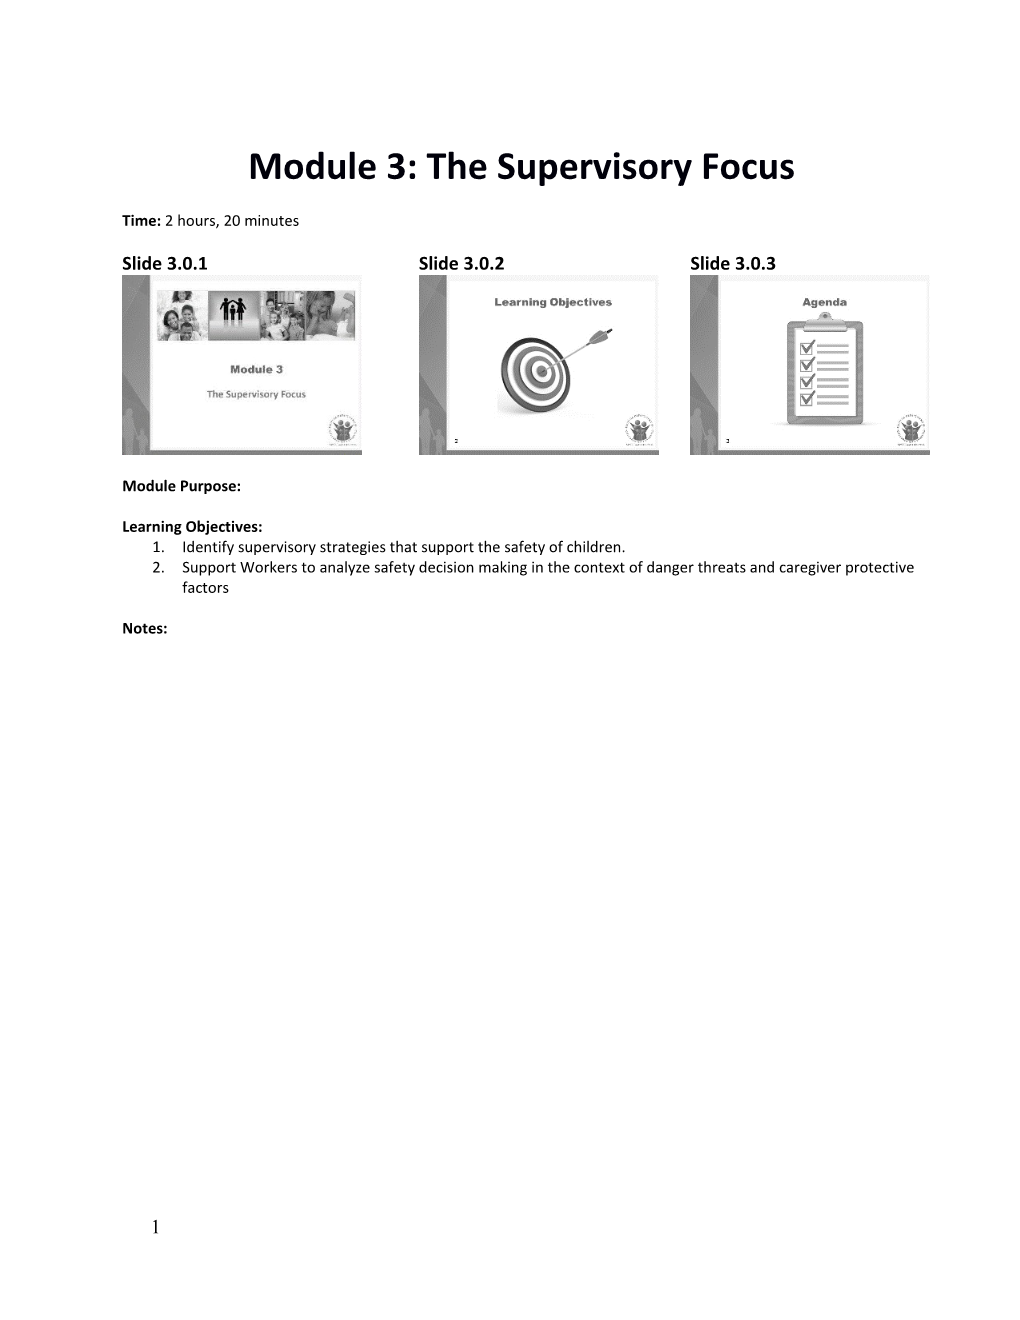 Module 3: the Supervisory Focus